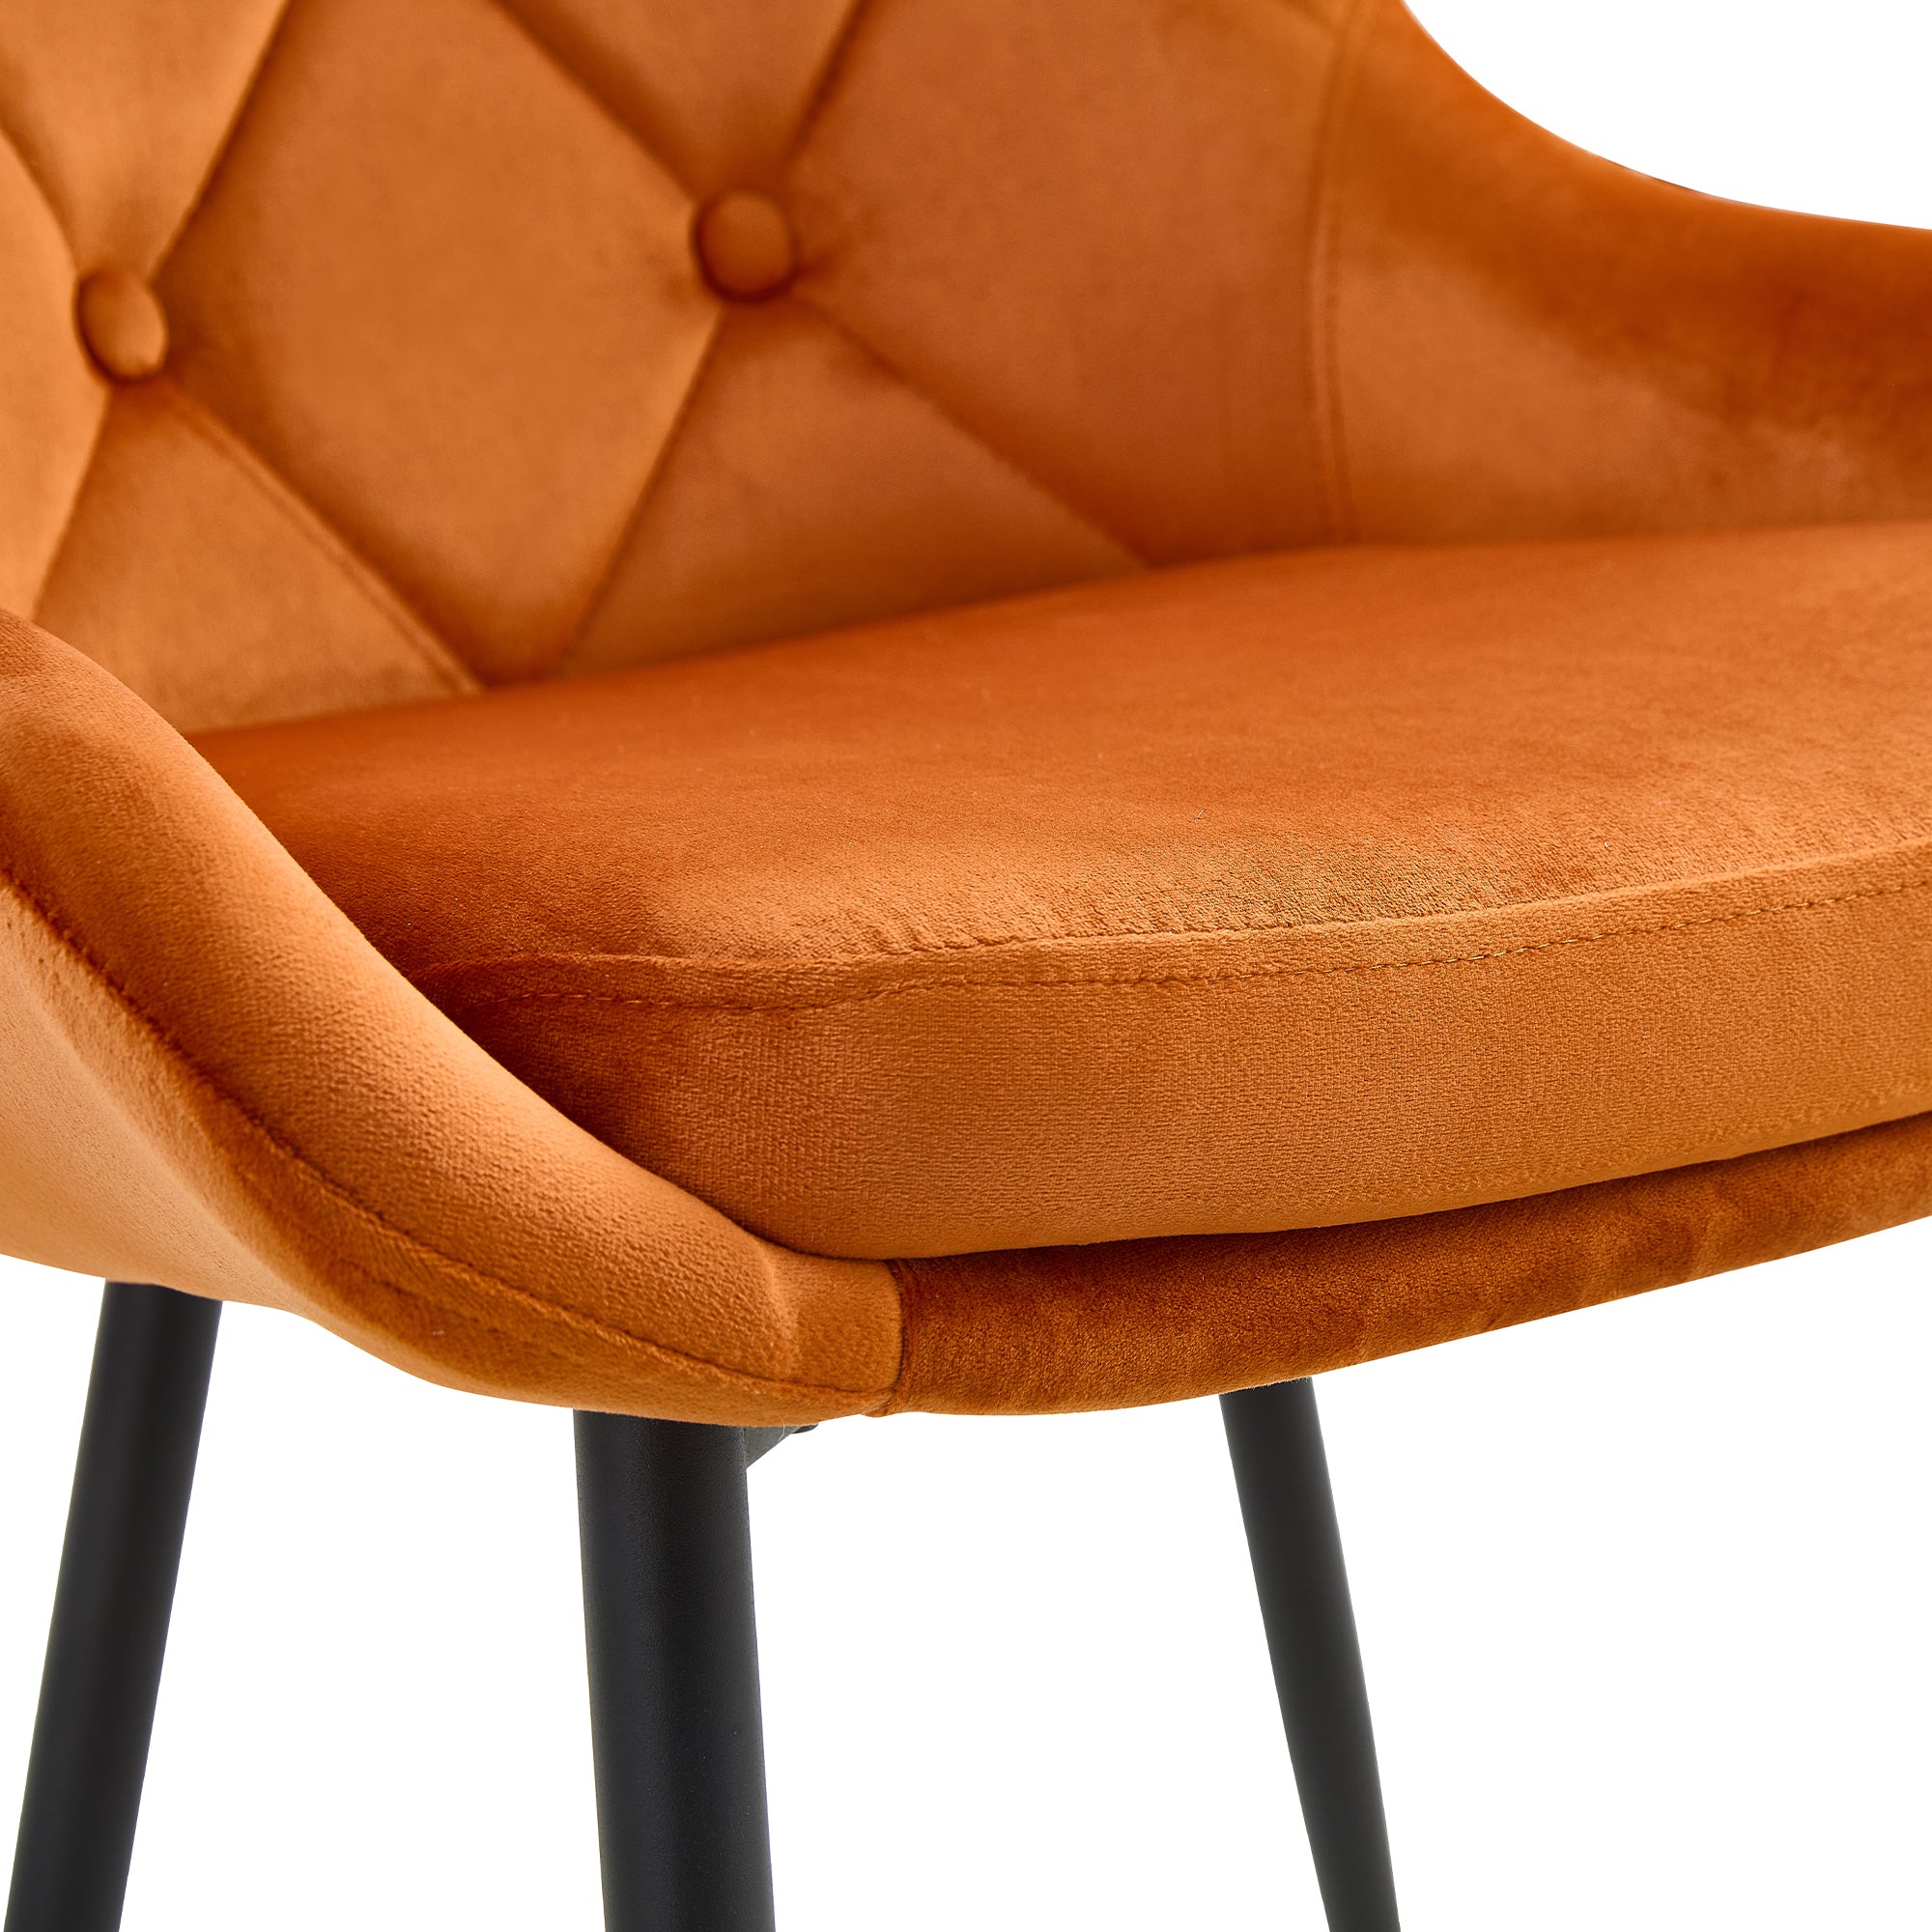 Modern Orange Velvet Dining Chairs with Black Legs (Set of 2) - Orange